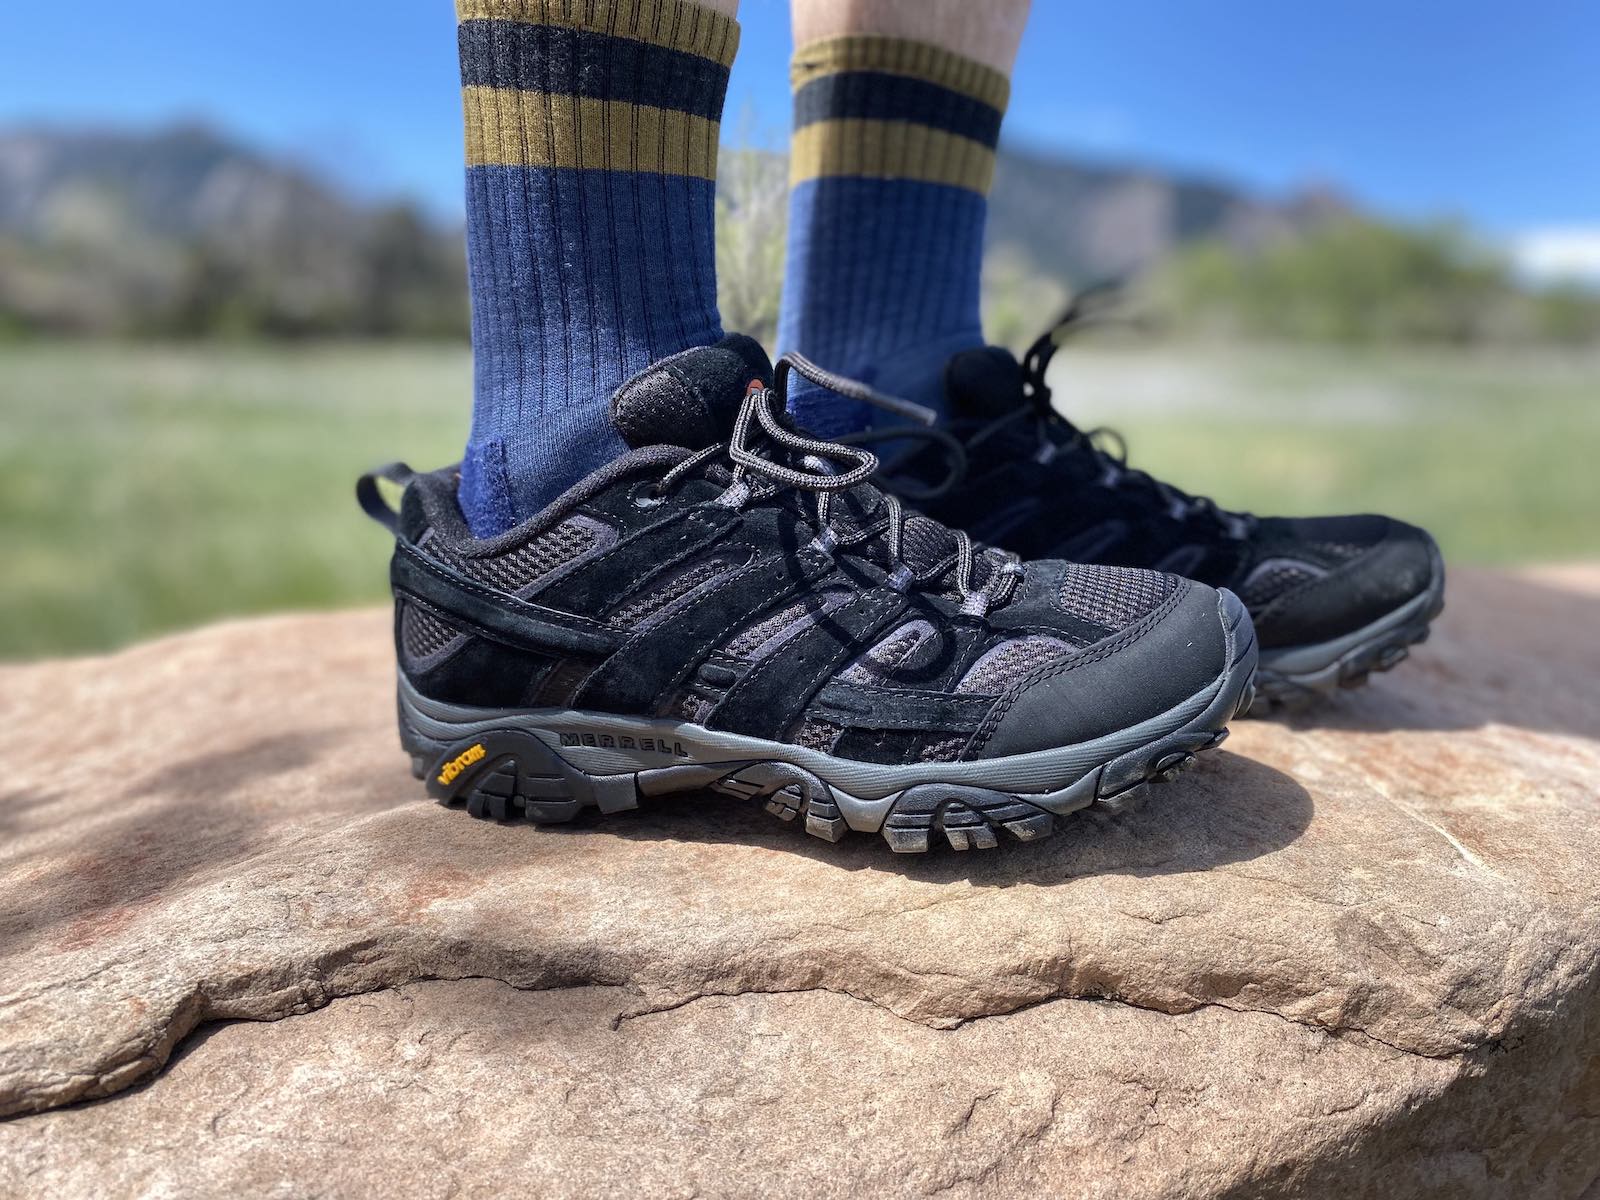 Merrell Men's Moab 2 hiking shoe